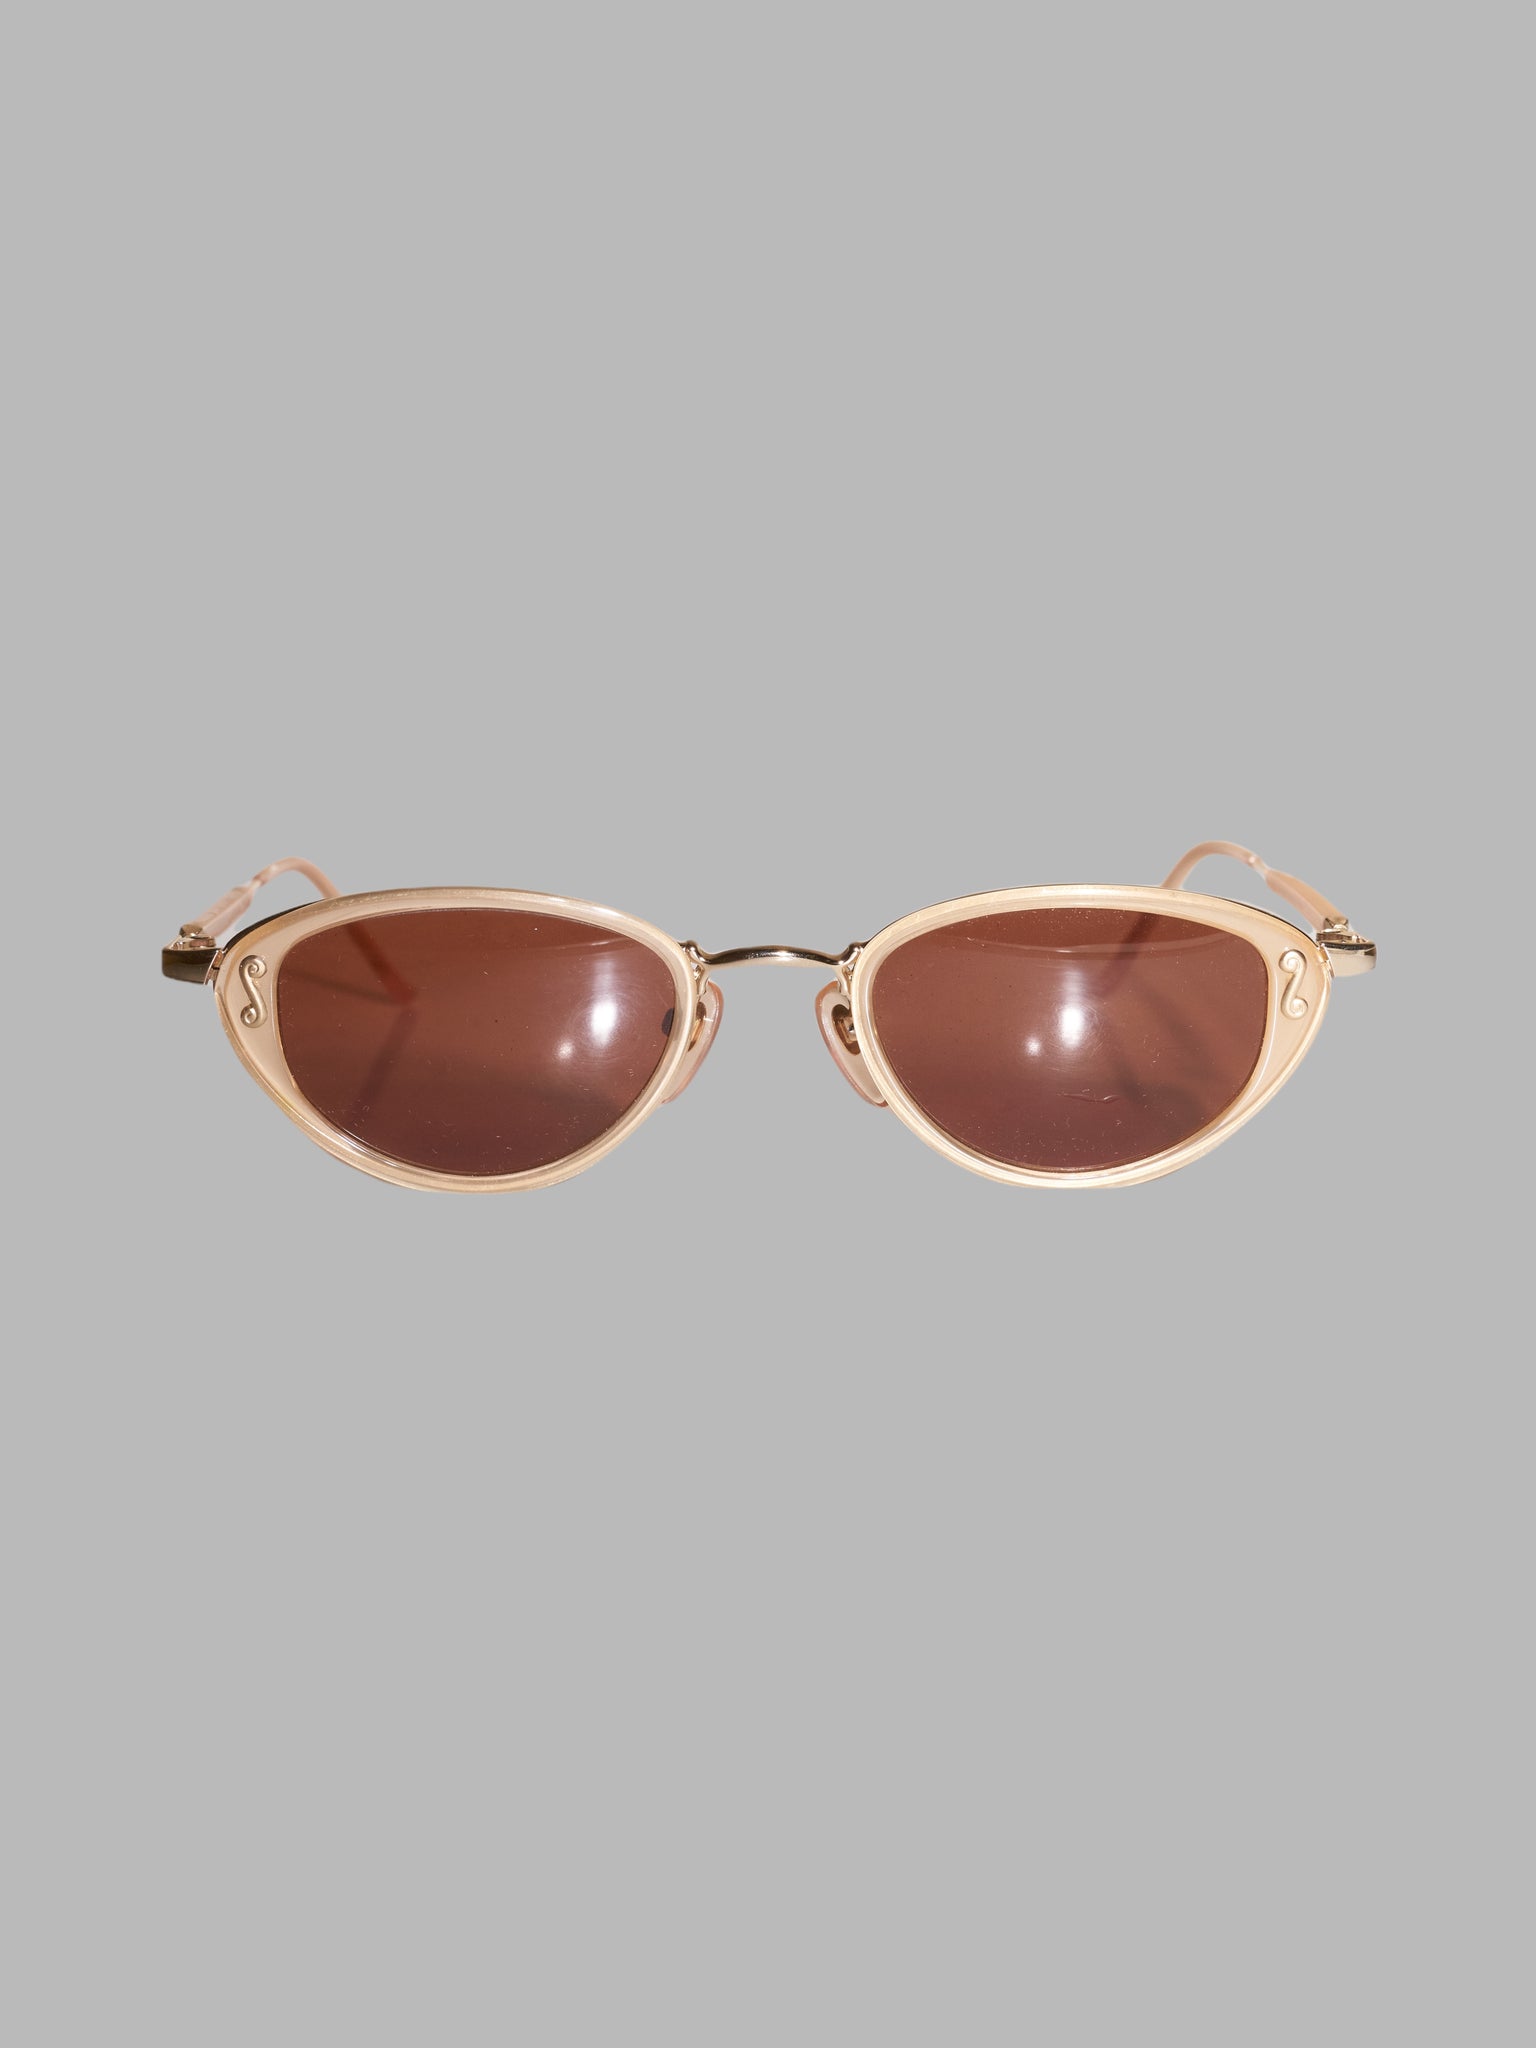 Martine Sitbon translucent peach sunglasses with brown lenses